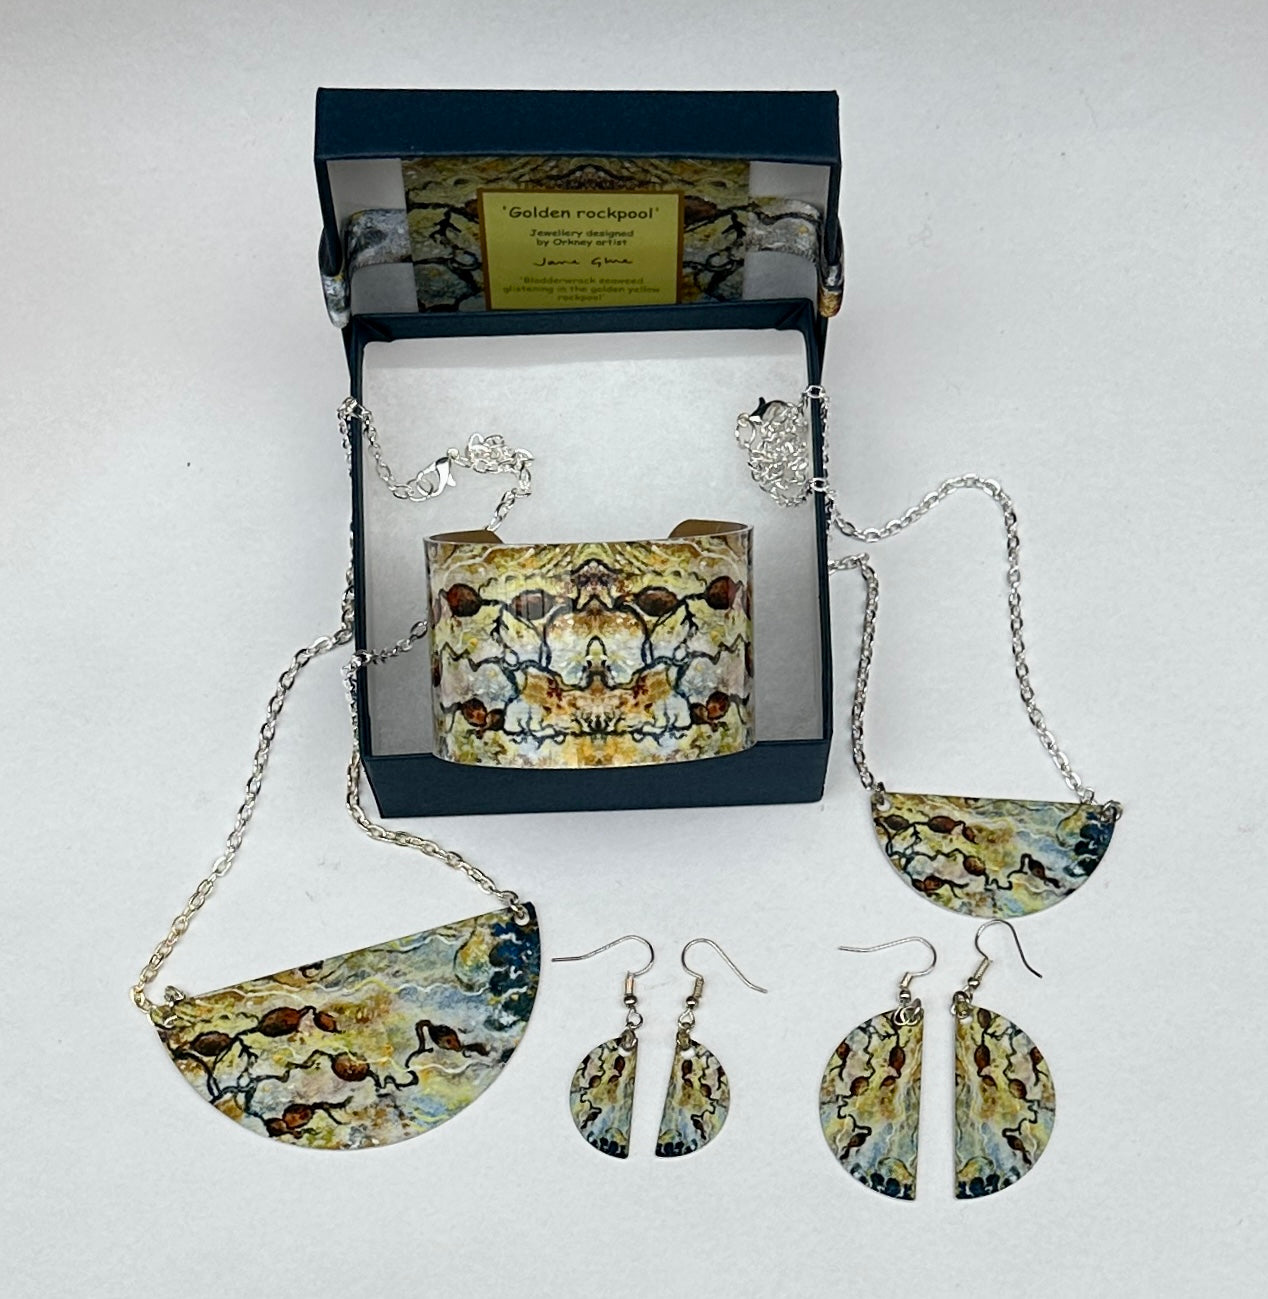 Jewellery by Jane Glue, 'Golden rockpool' Earrings/small semi-circle